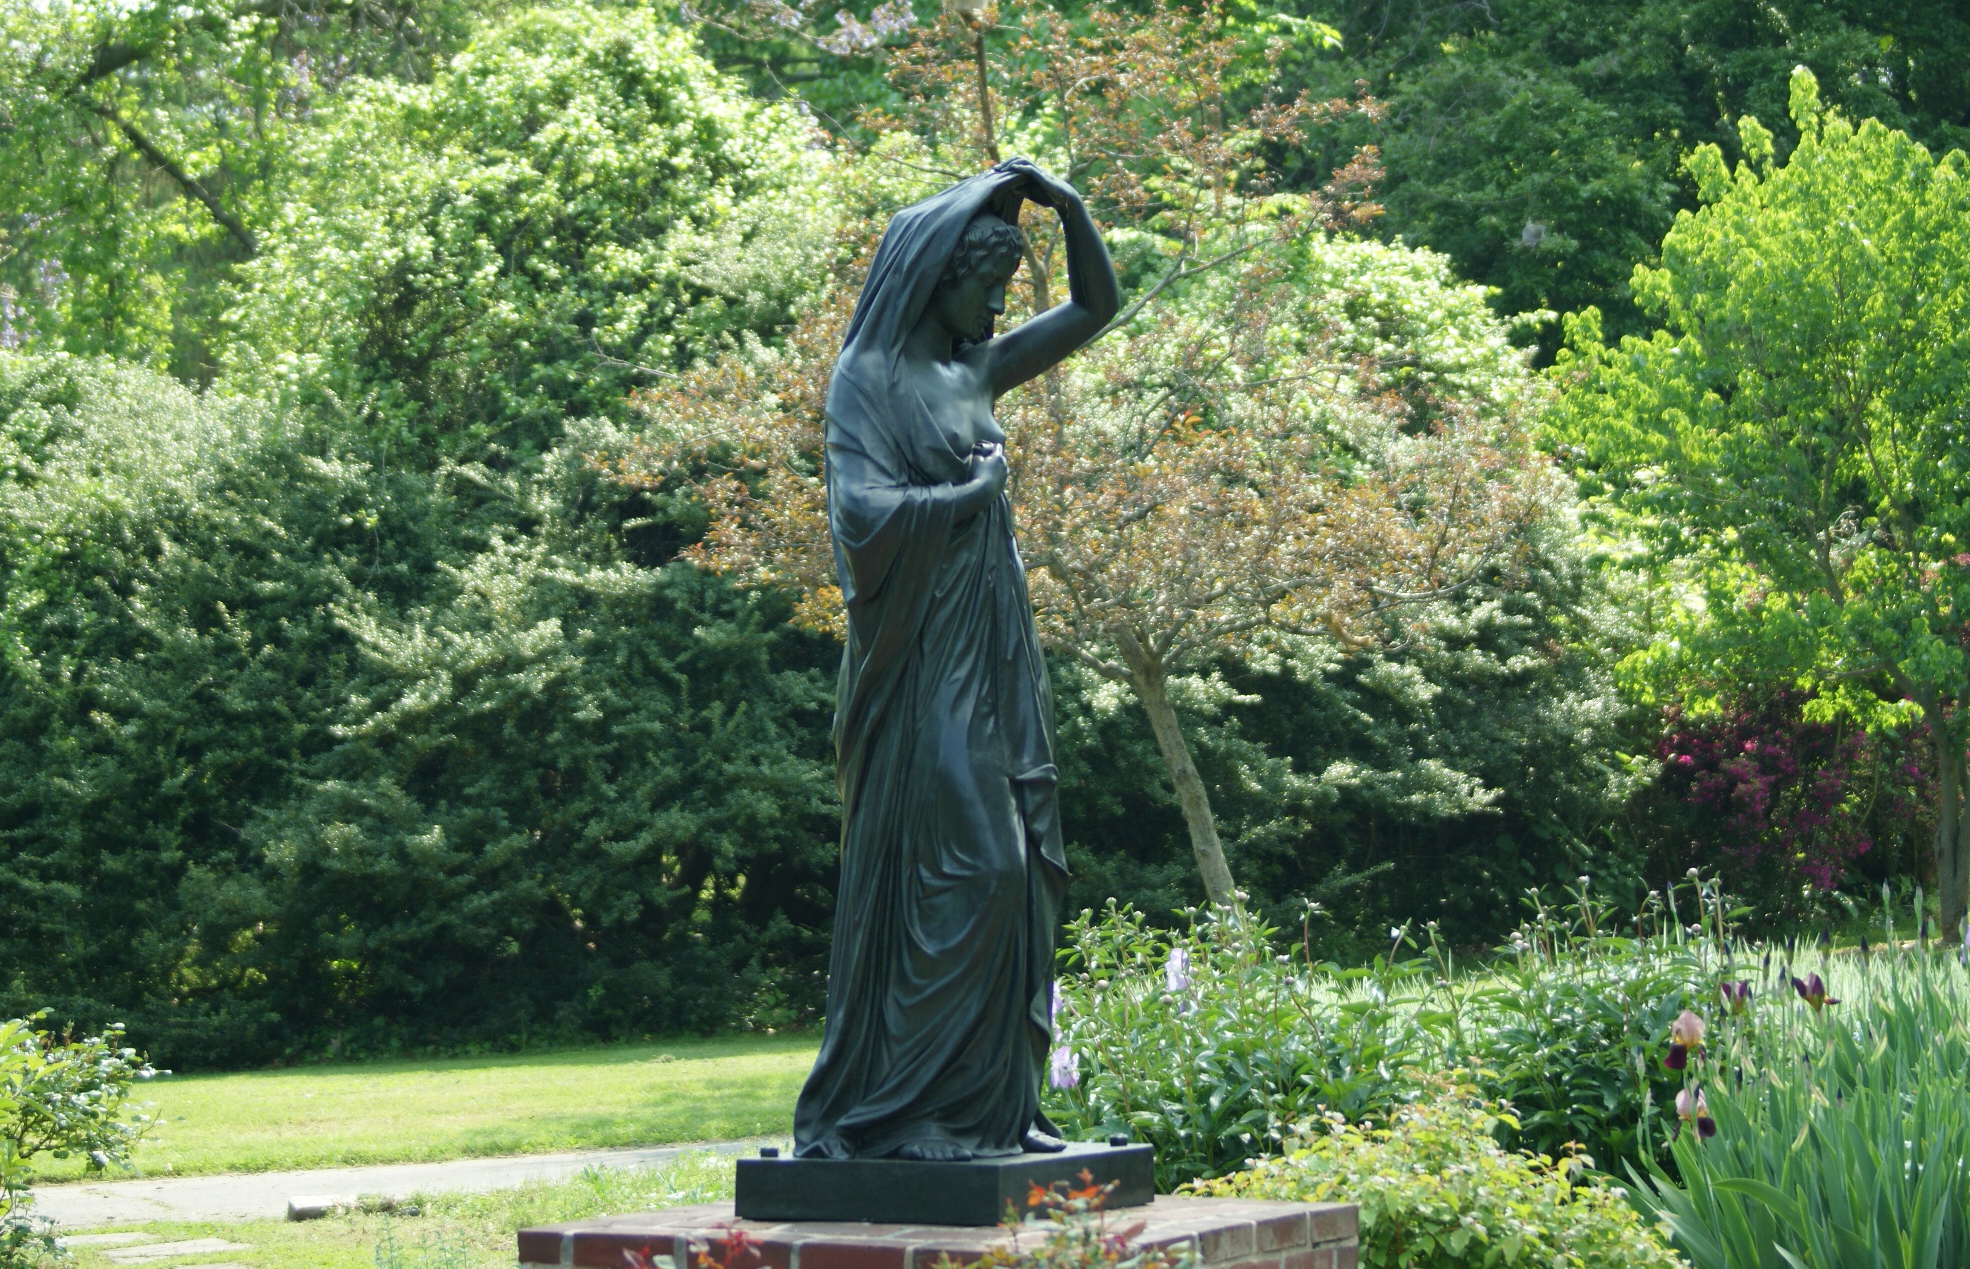 Night sculpture in Fairmount Park - a shrouded woman